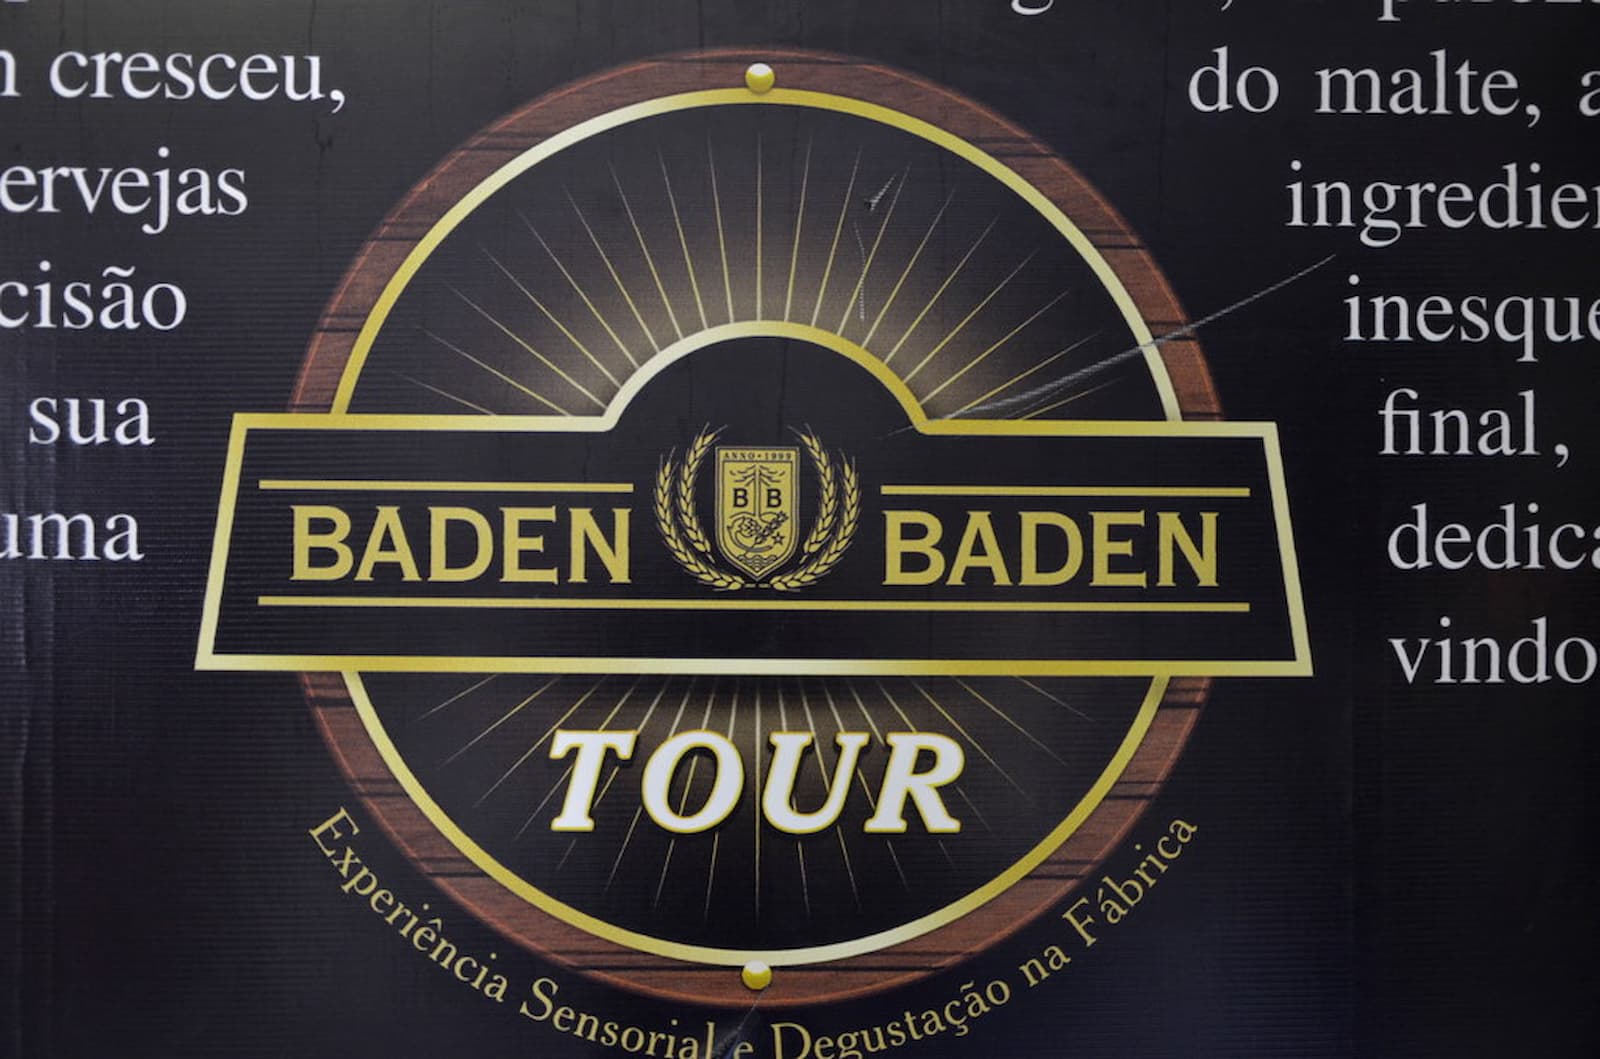 Cervejaria Baden Baden